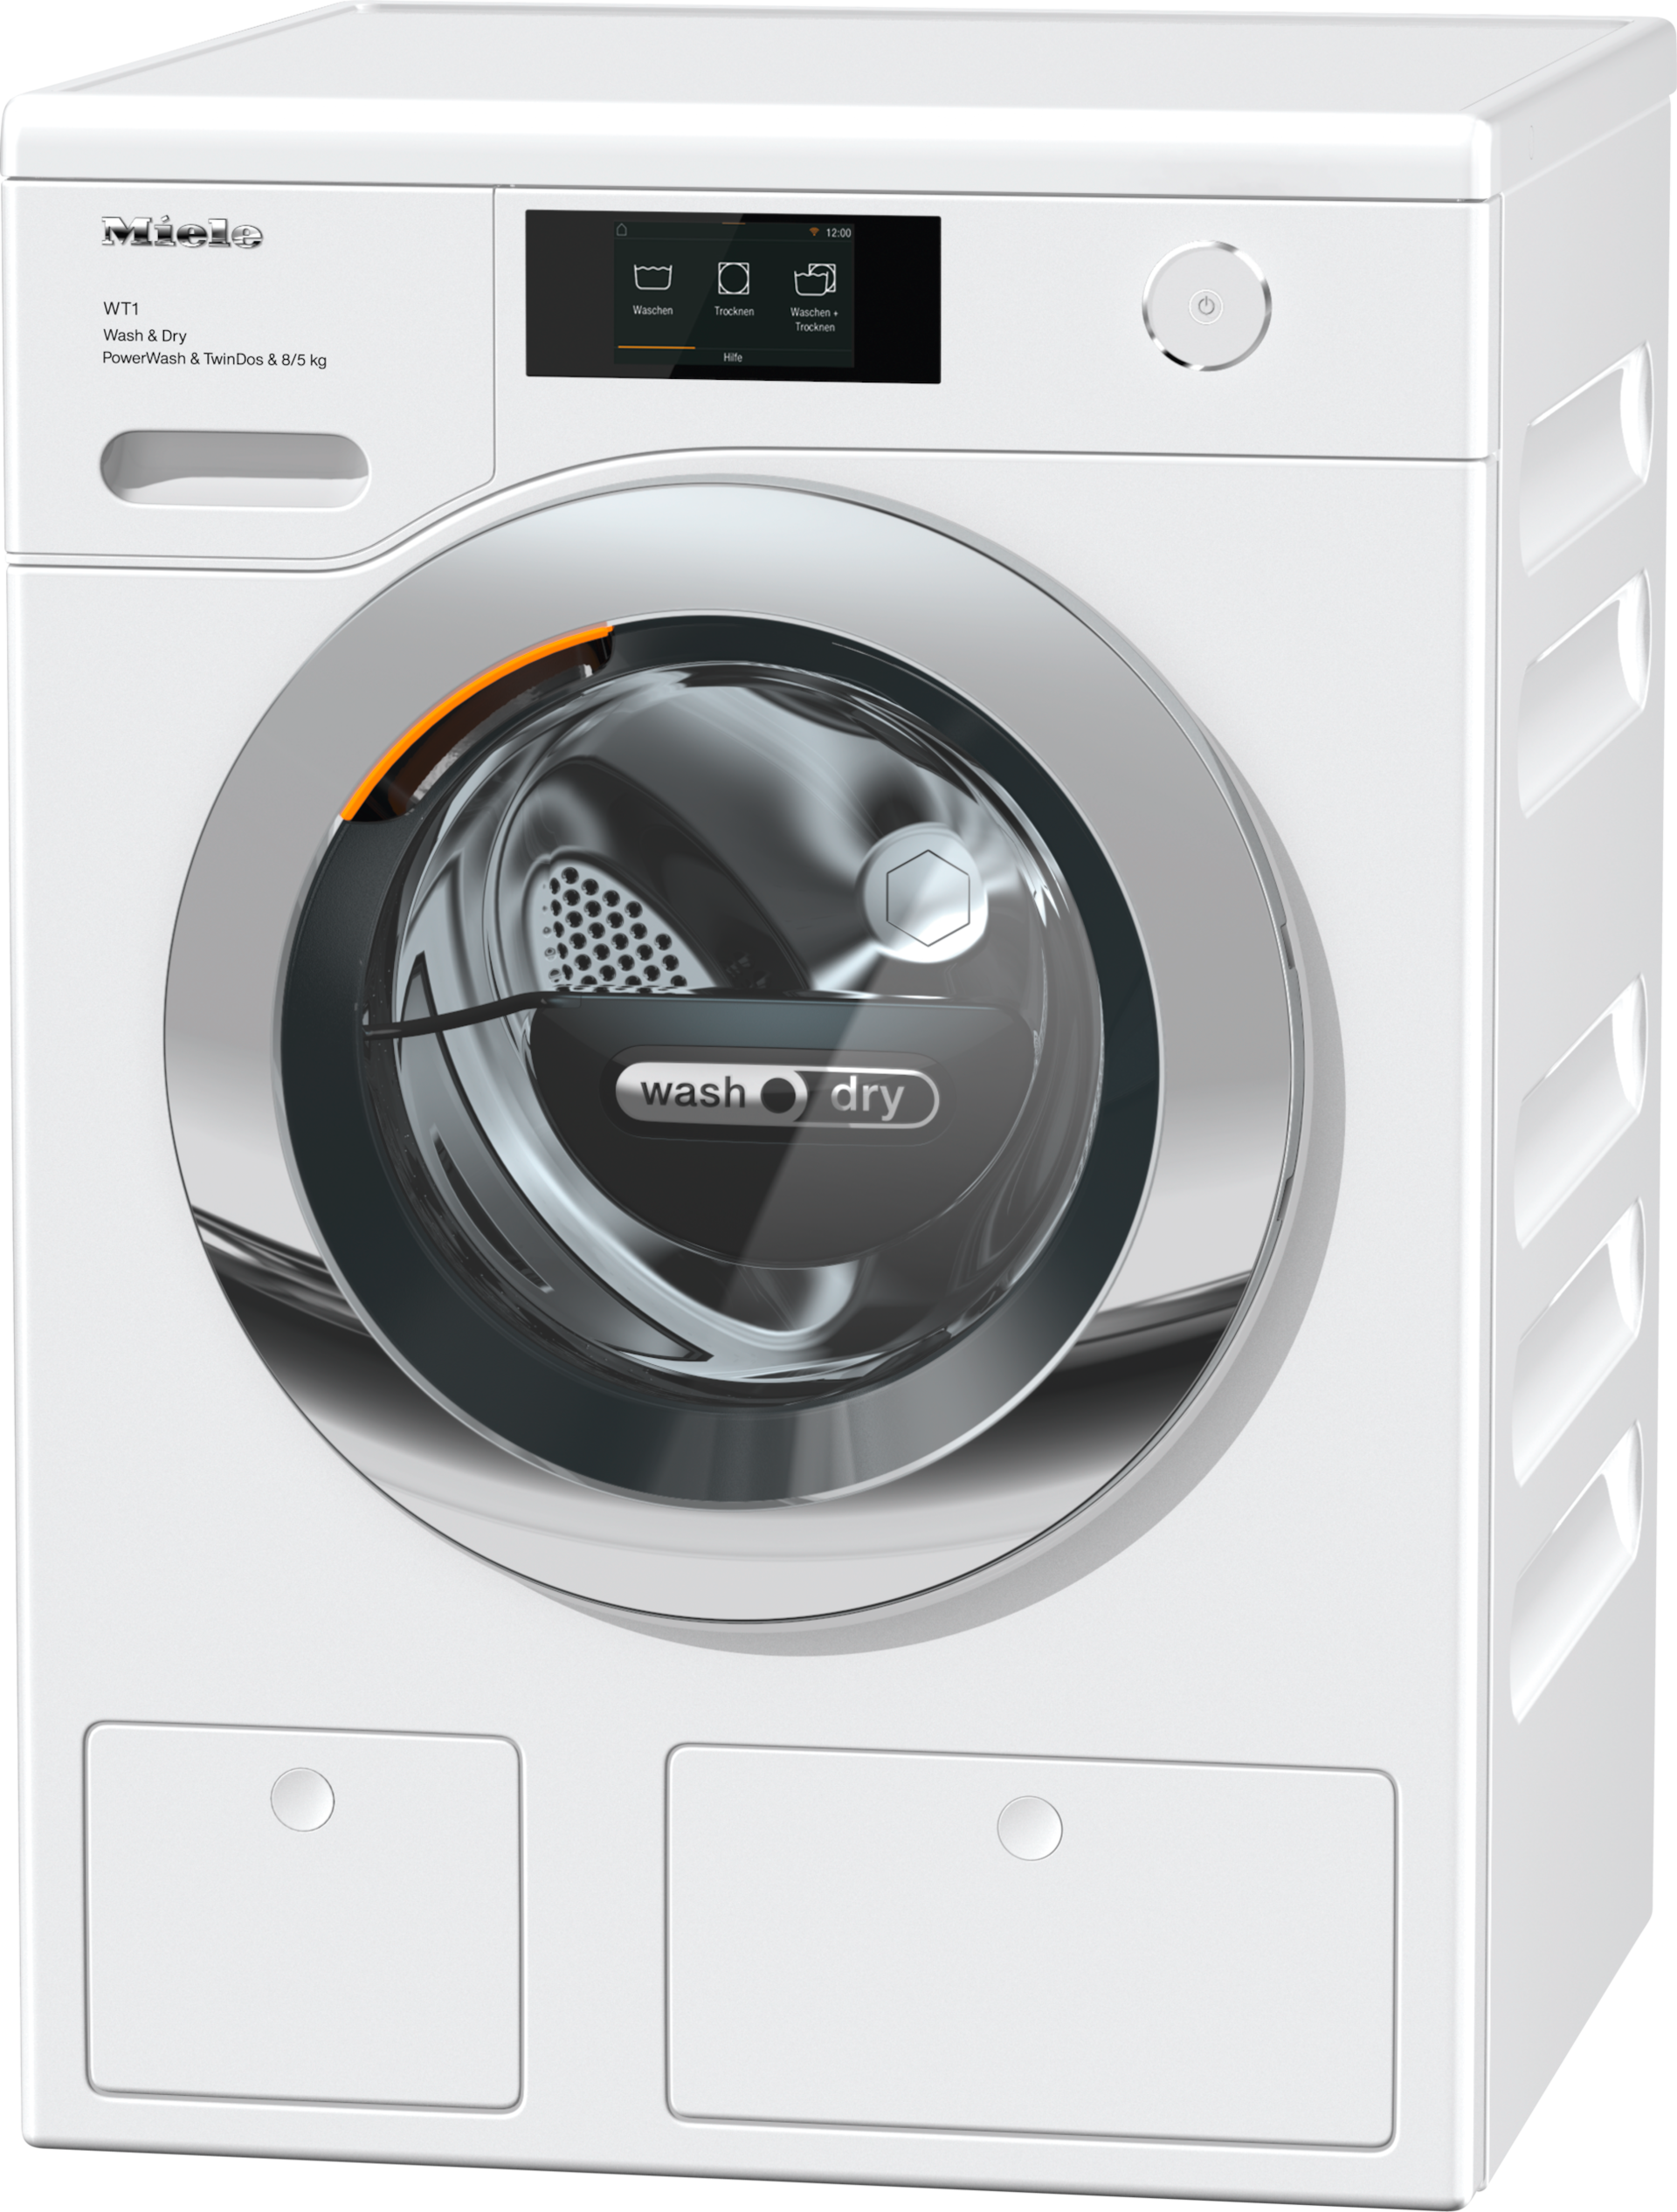 Waschmaschinen - WTR860WPM PWash&TDos 8/5kg Lotosweiß - 1